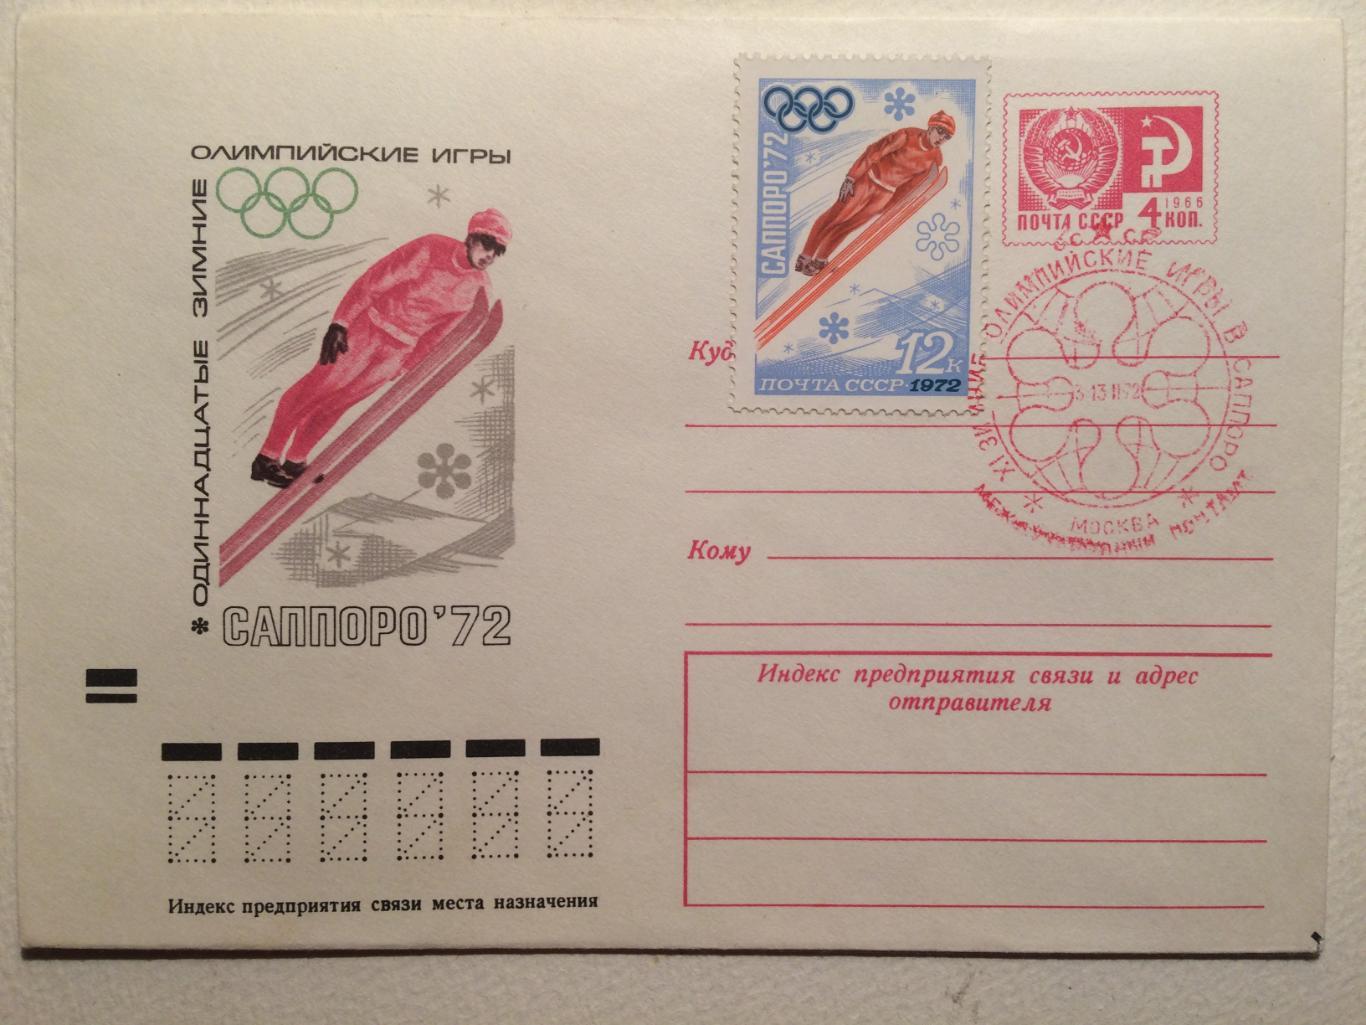 Олимпиада-1972 конверт гашение Саппоро-72